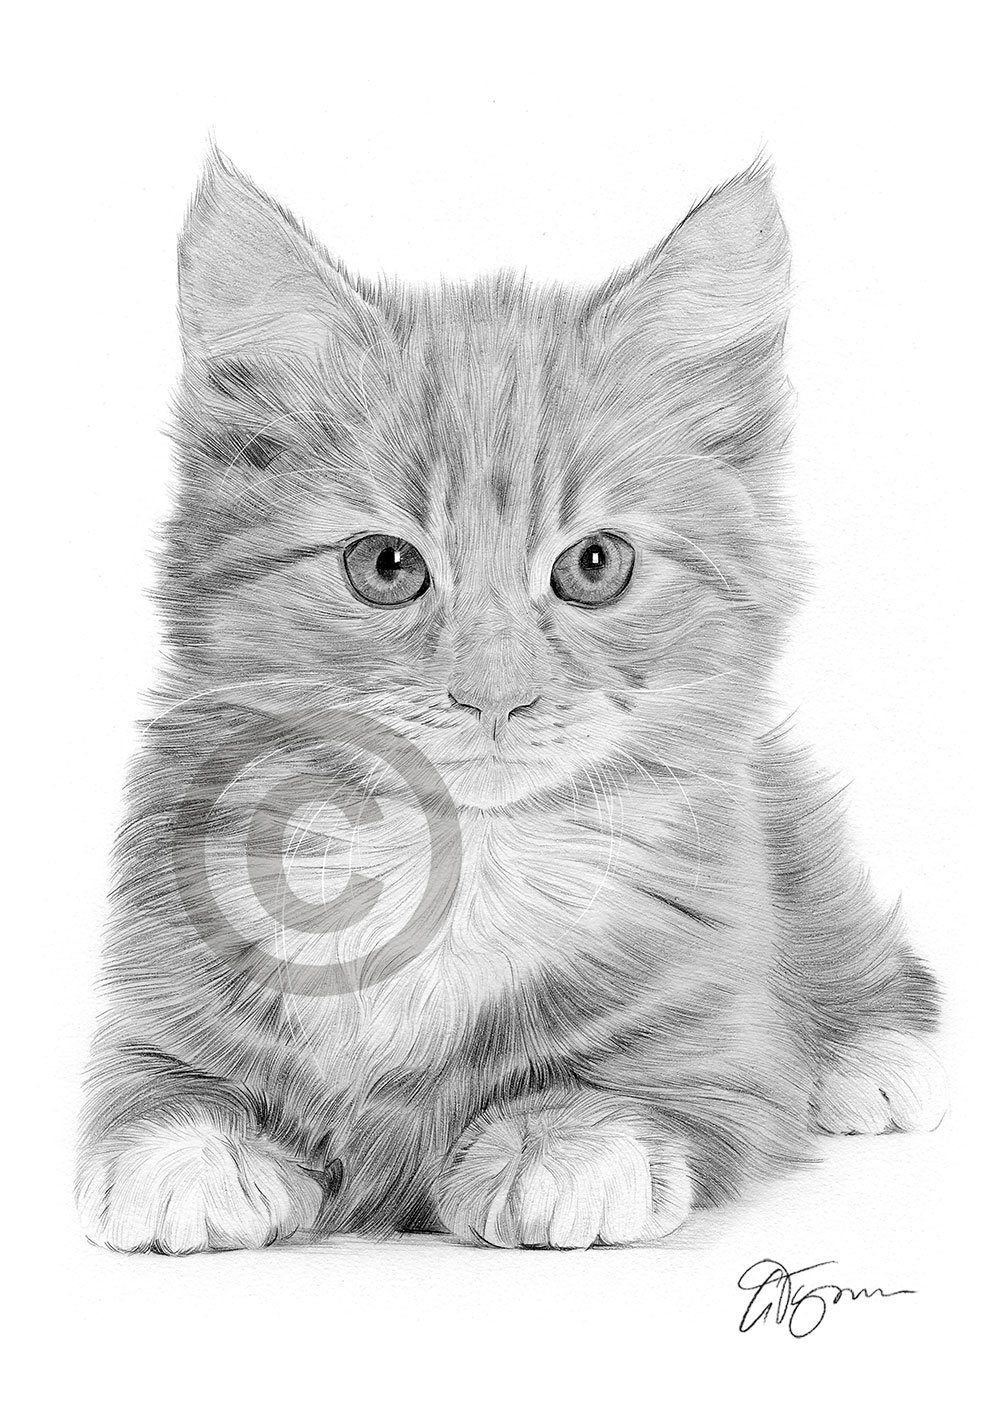 Pencil drawing of a kitten by UK artist Gary Tymon